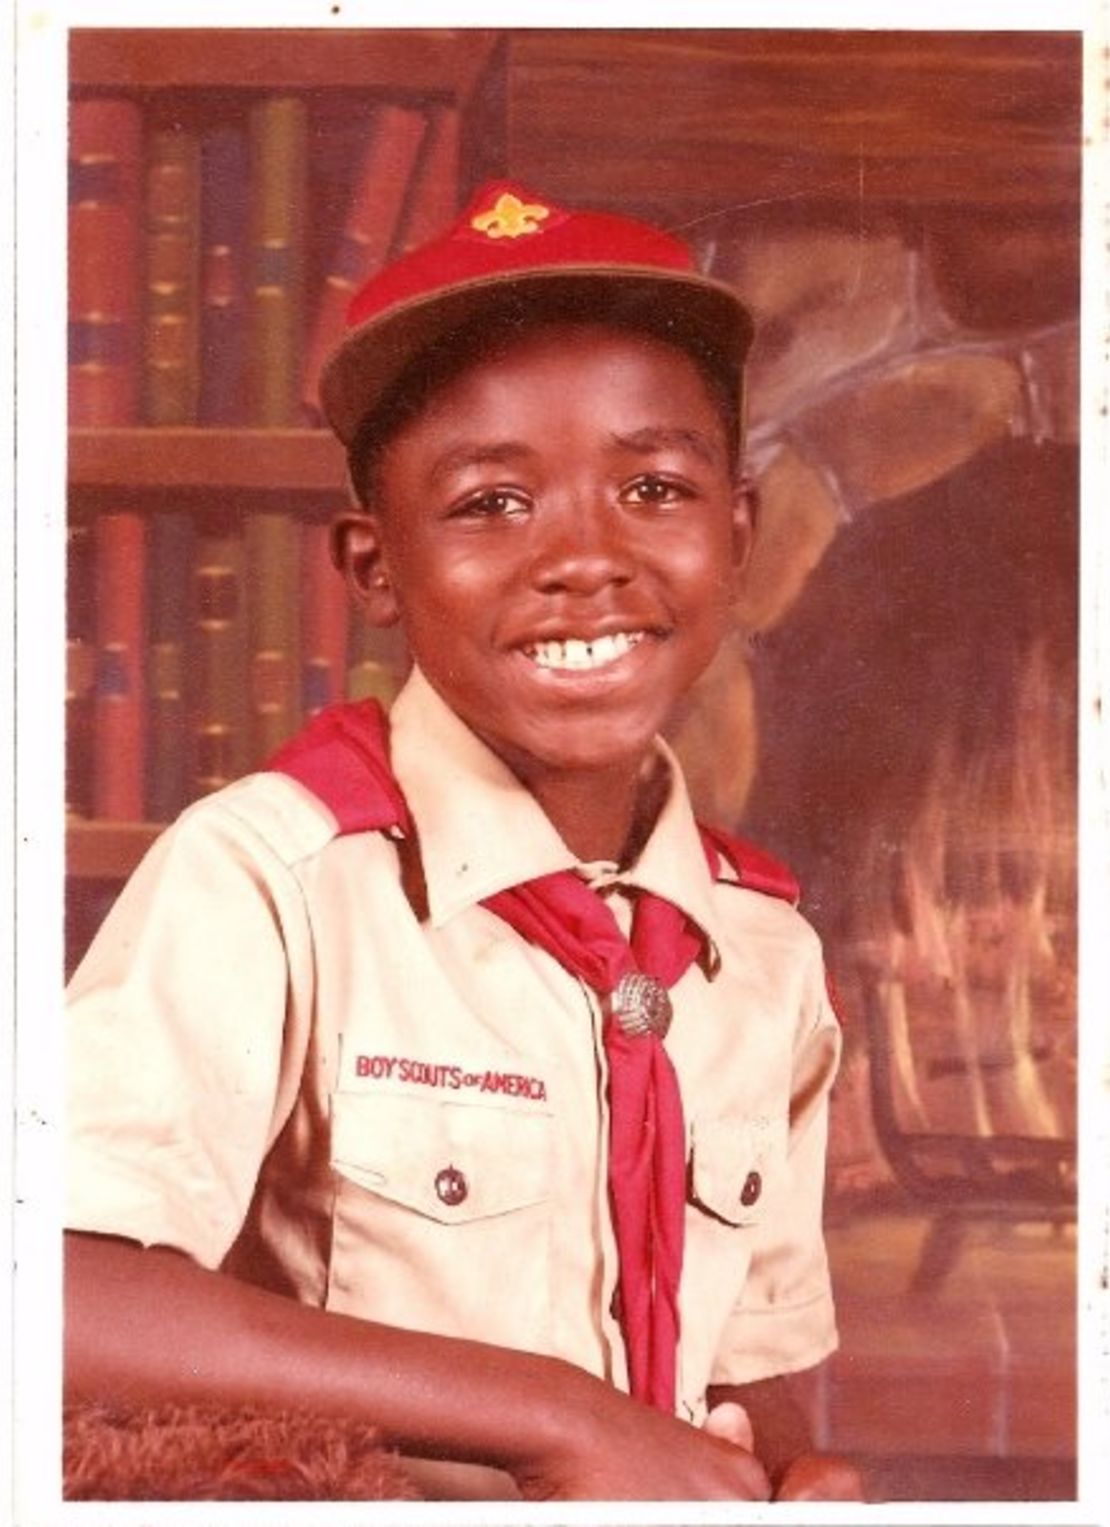 Robert Battle as a child in his Boy Scouts uniform